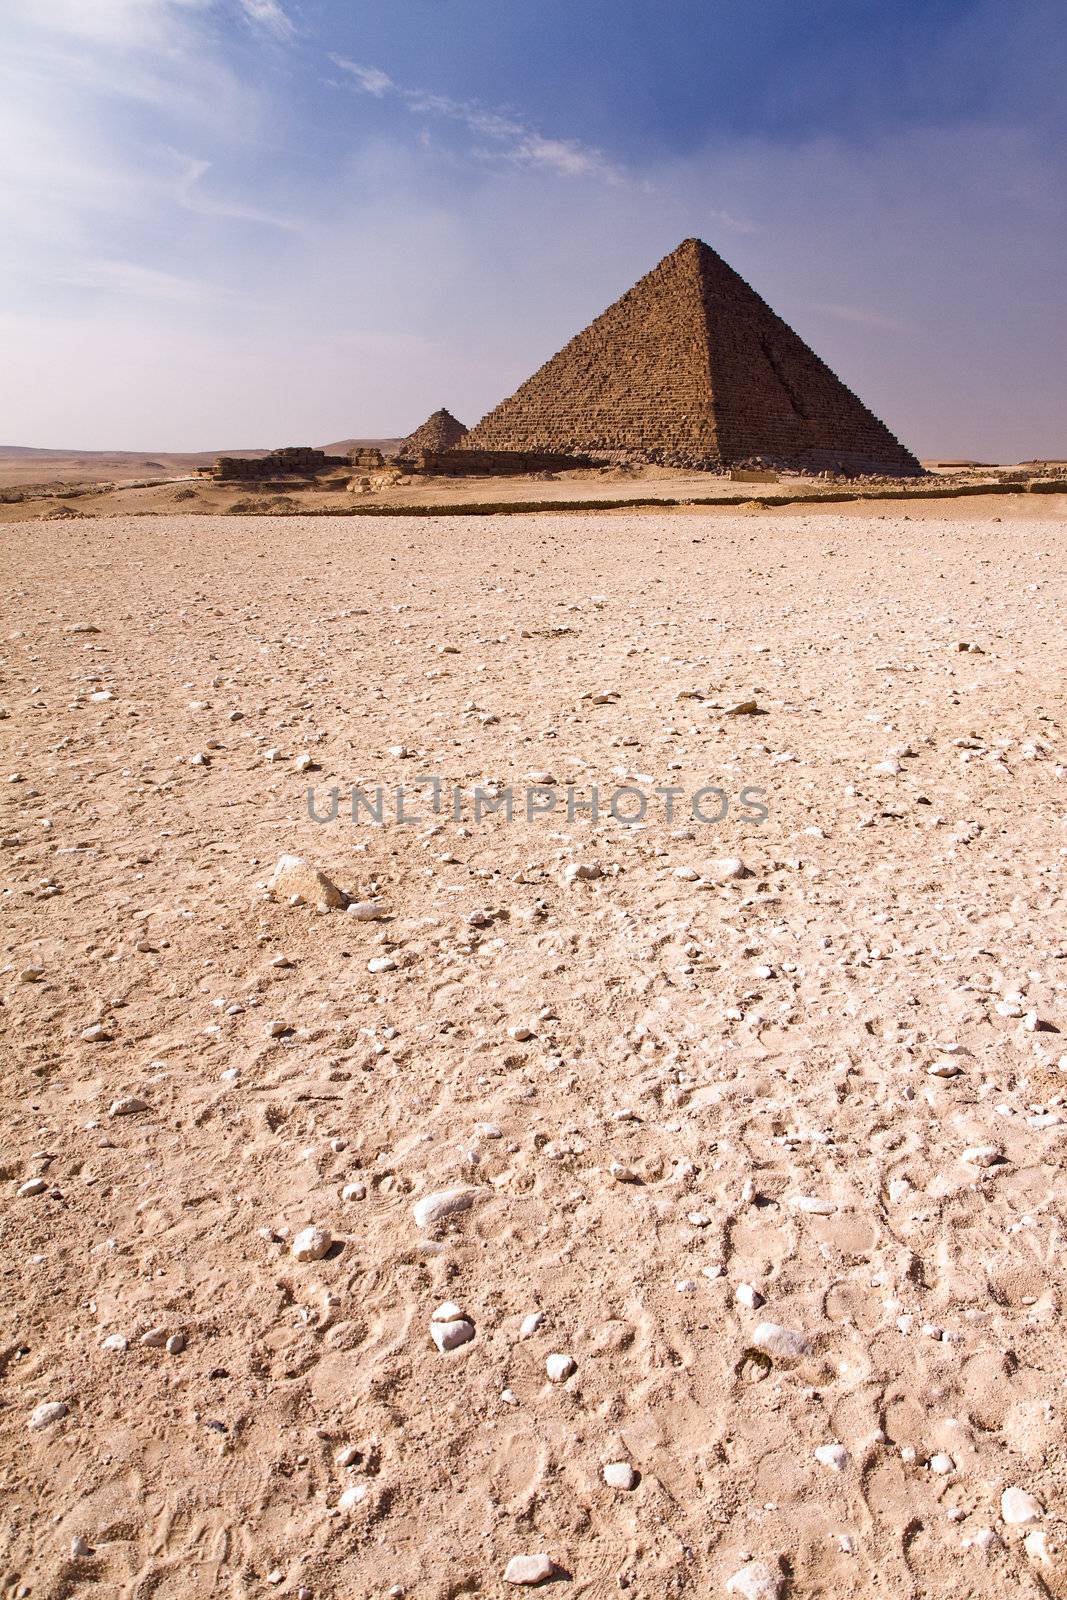 Pyramid in the desert by Gbuglok